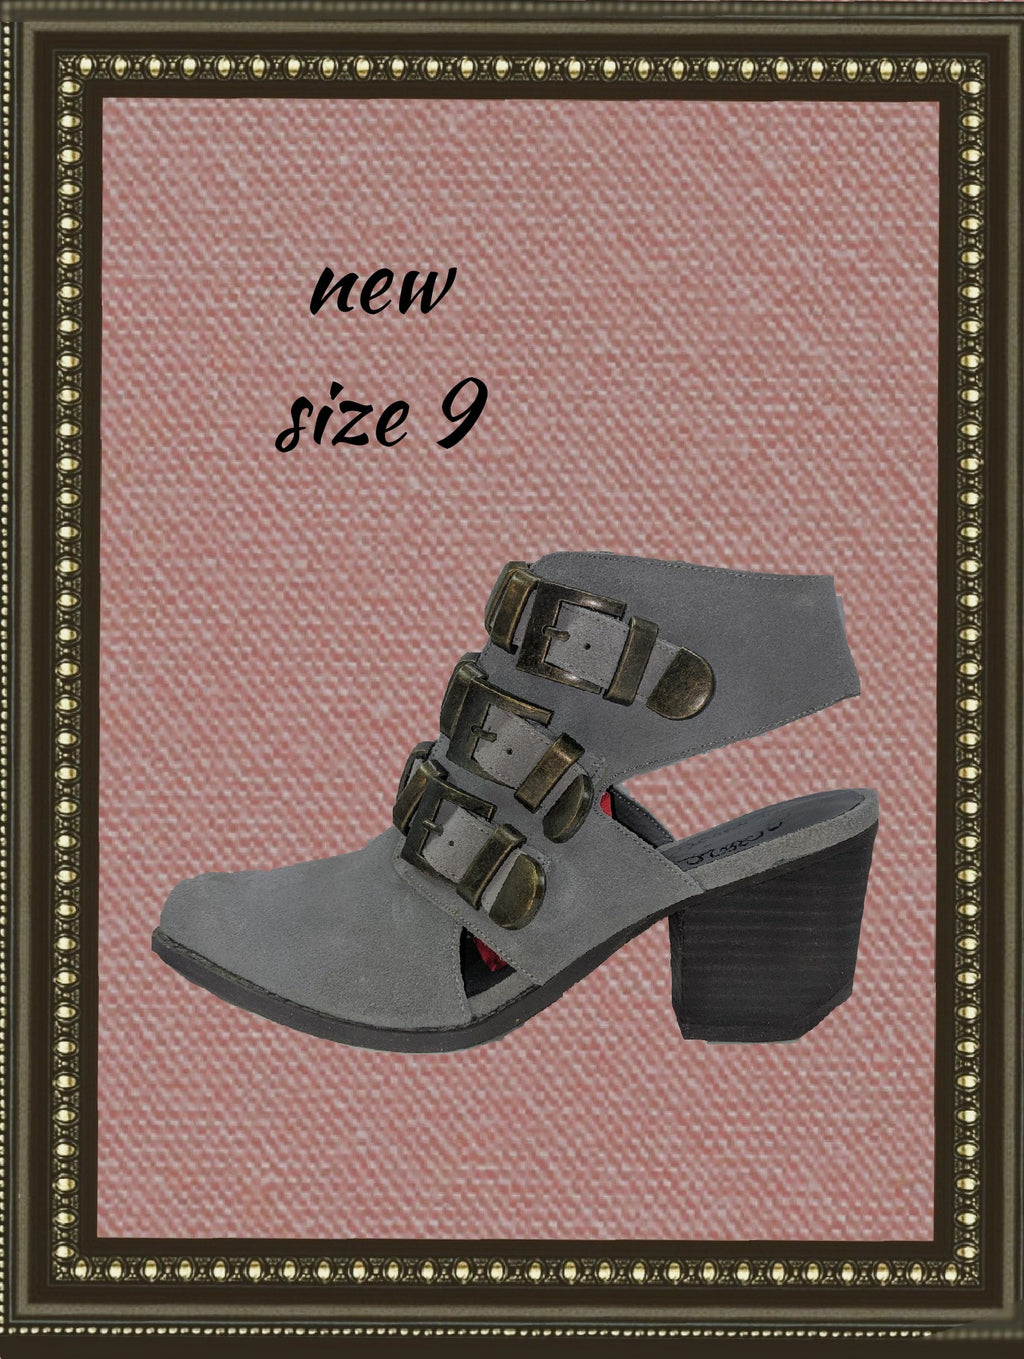 NYLA suede shoe/boot - beautiful- size 9 (b)